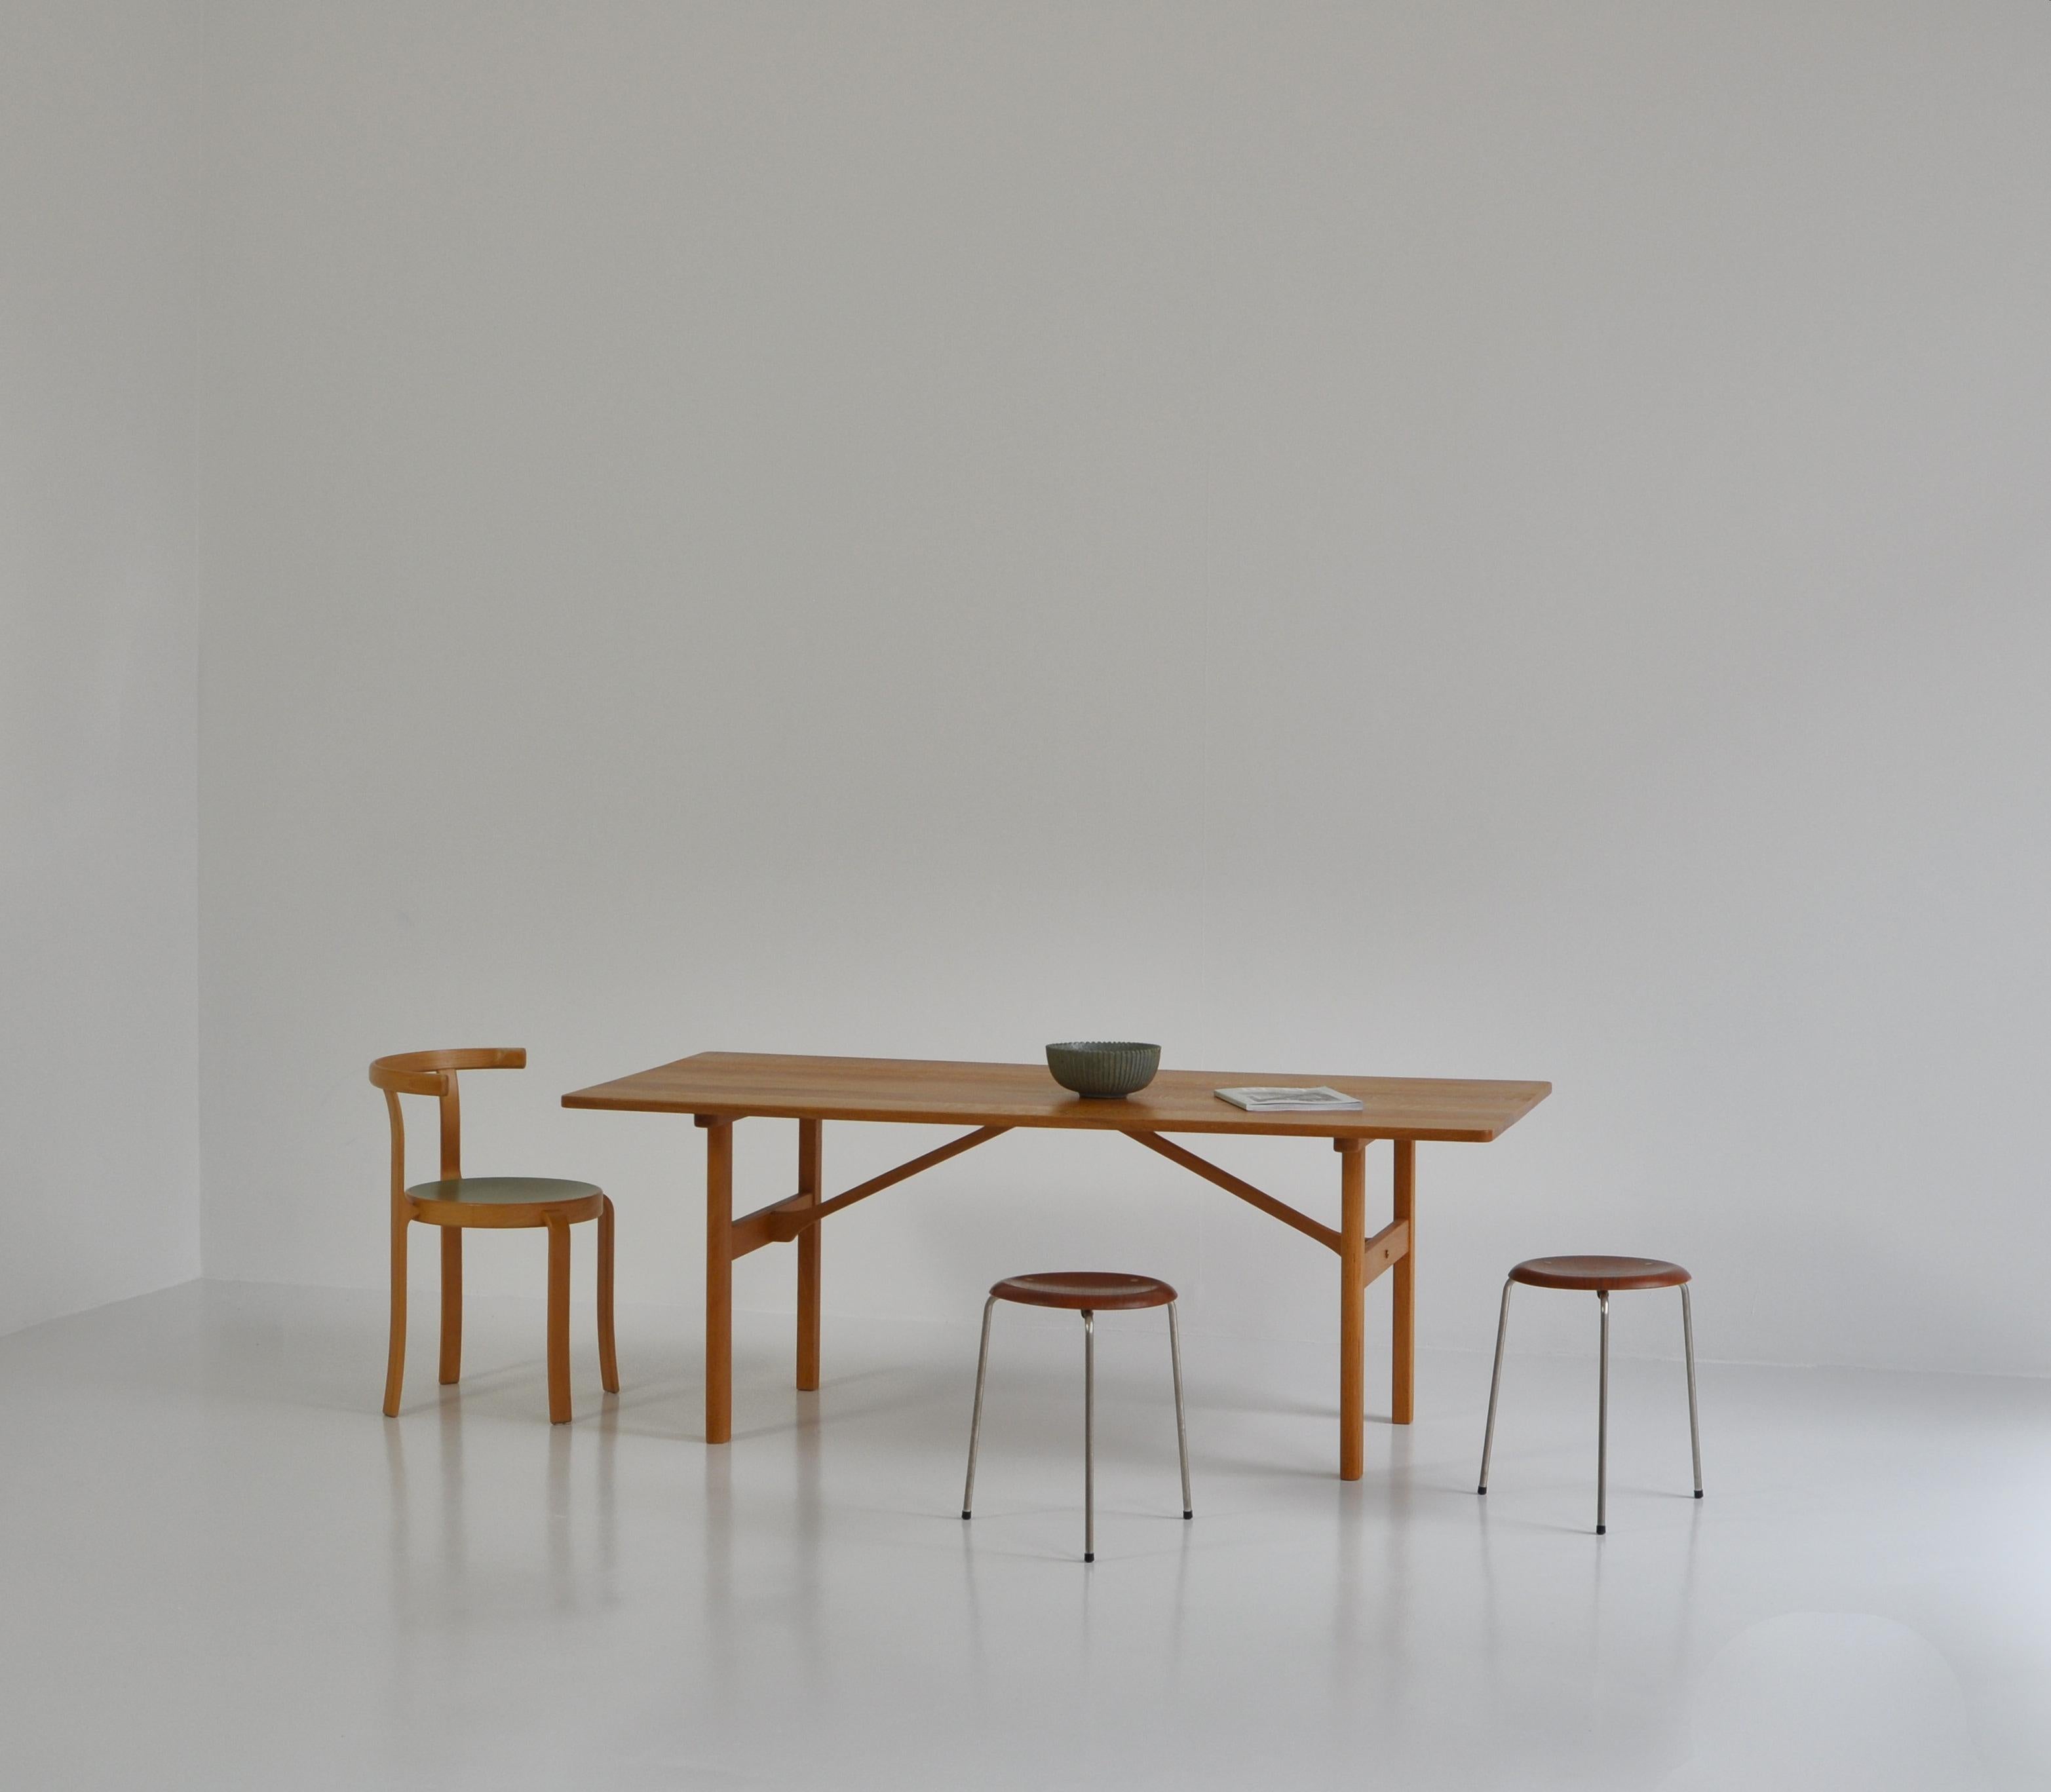 Rare vintage dining table or desk by Børge Mogensen designed in 1958 and manufactured at 